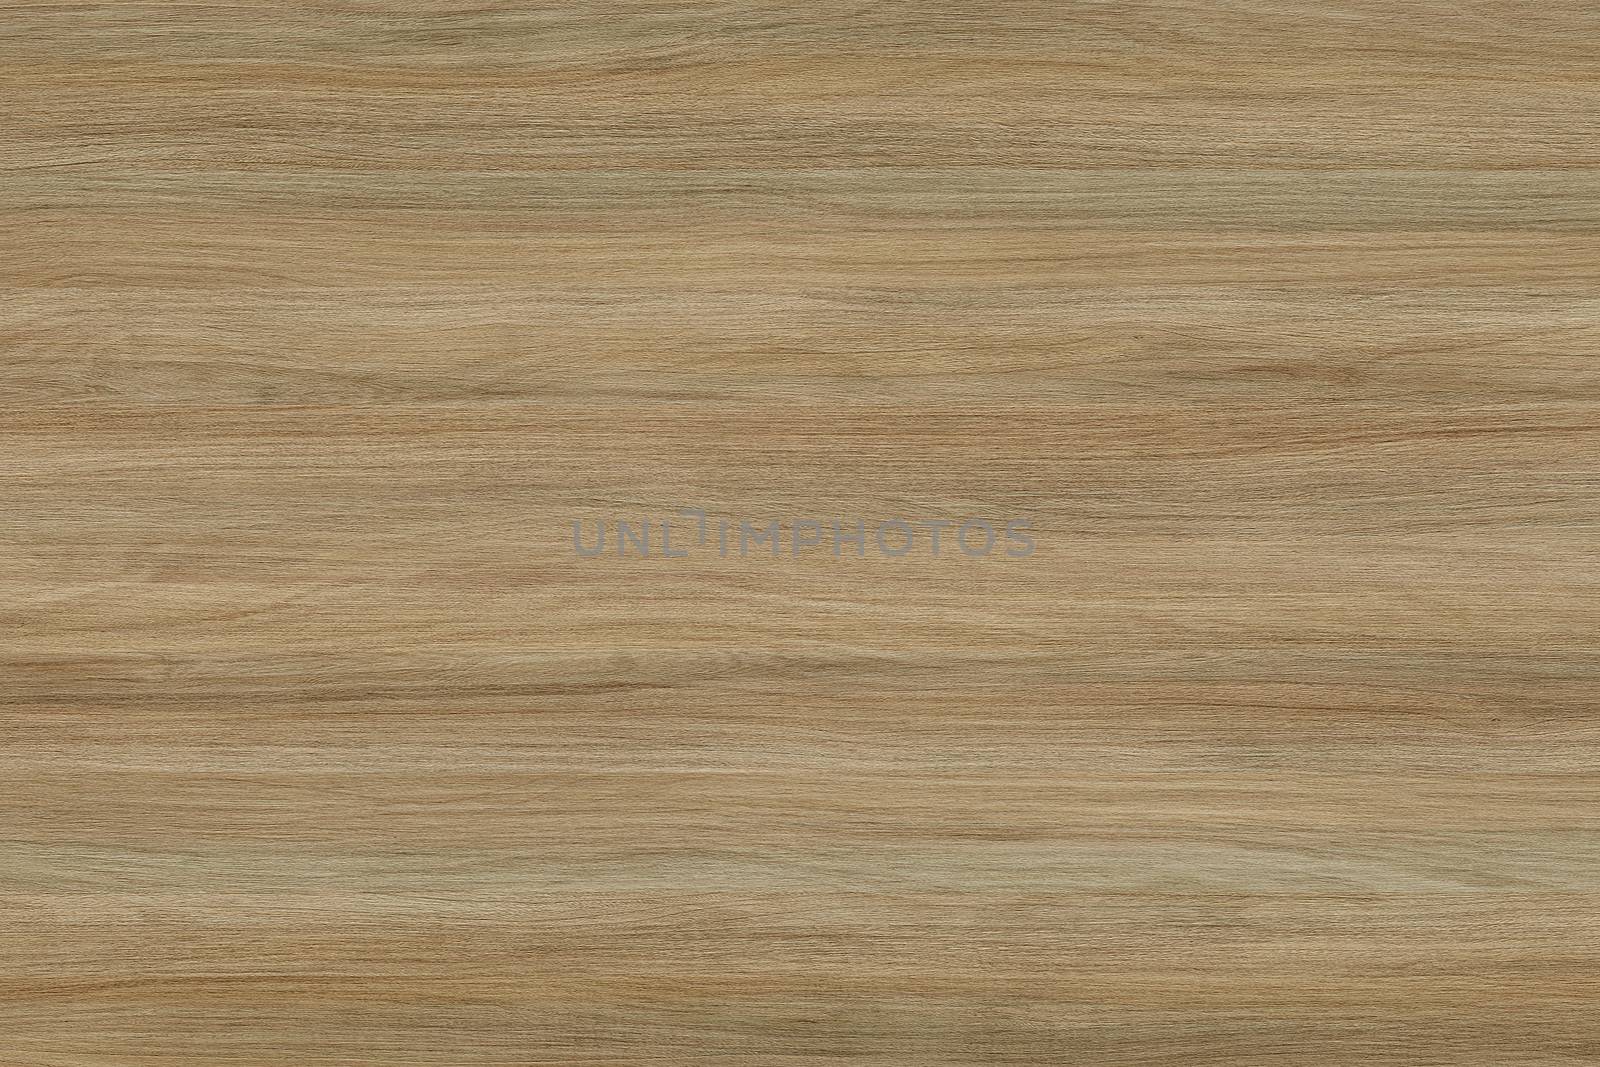 Grunge wood pattern texture background, wooden planks